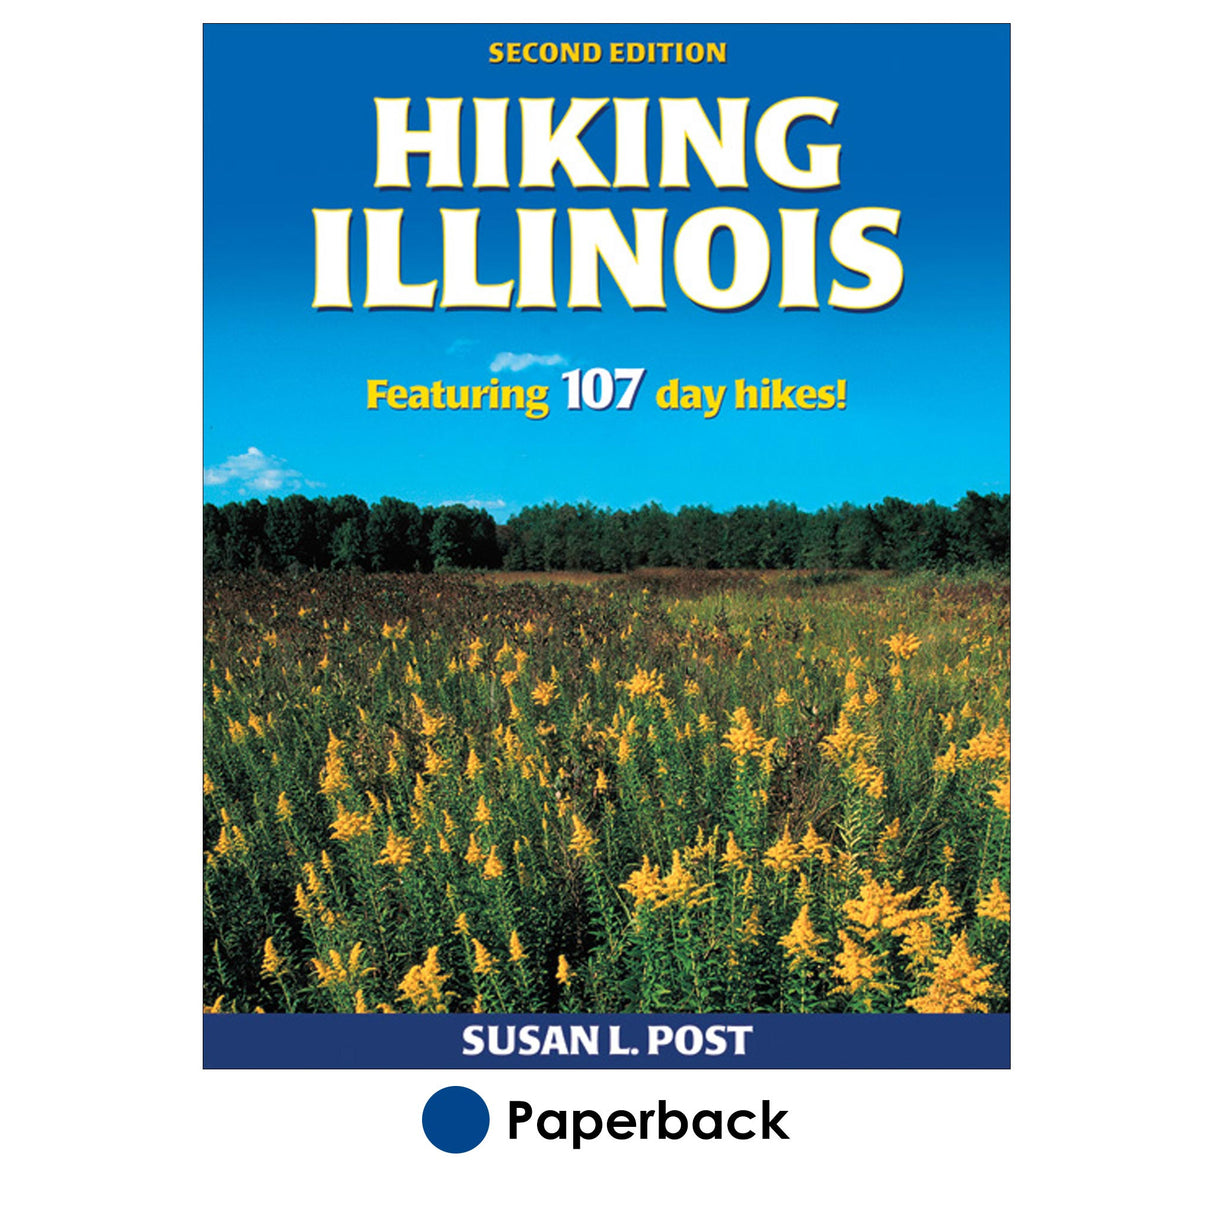 Hiking Illinois - 2nd Edition